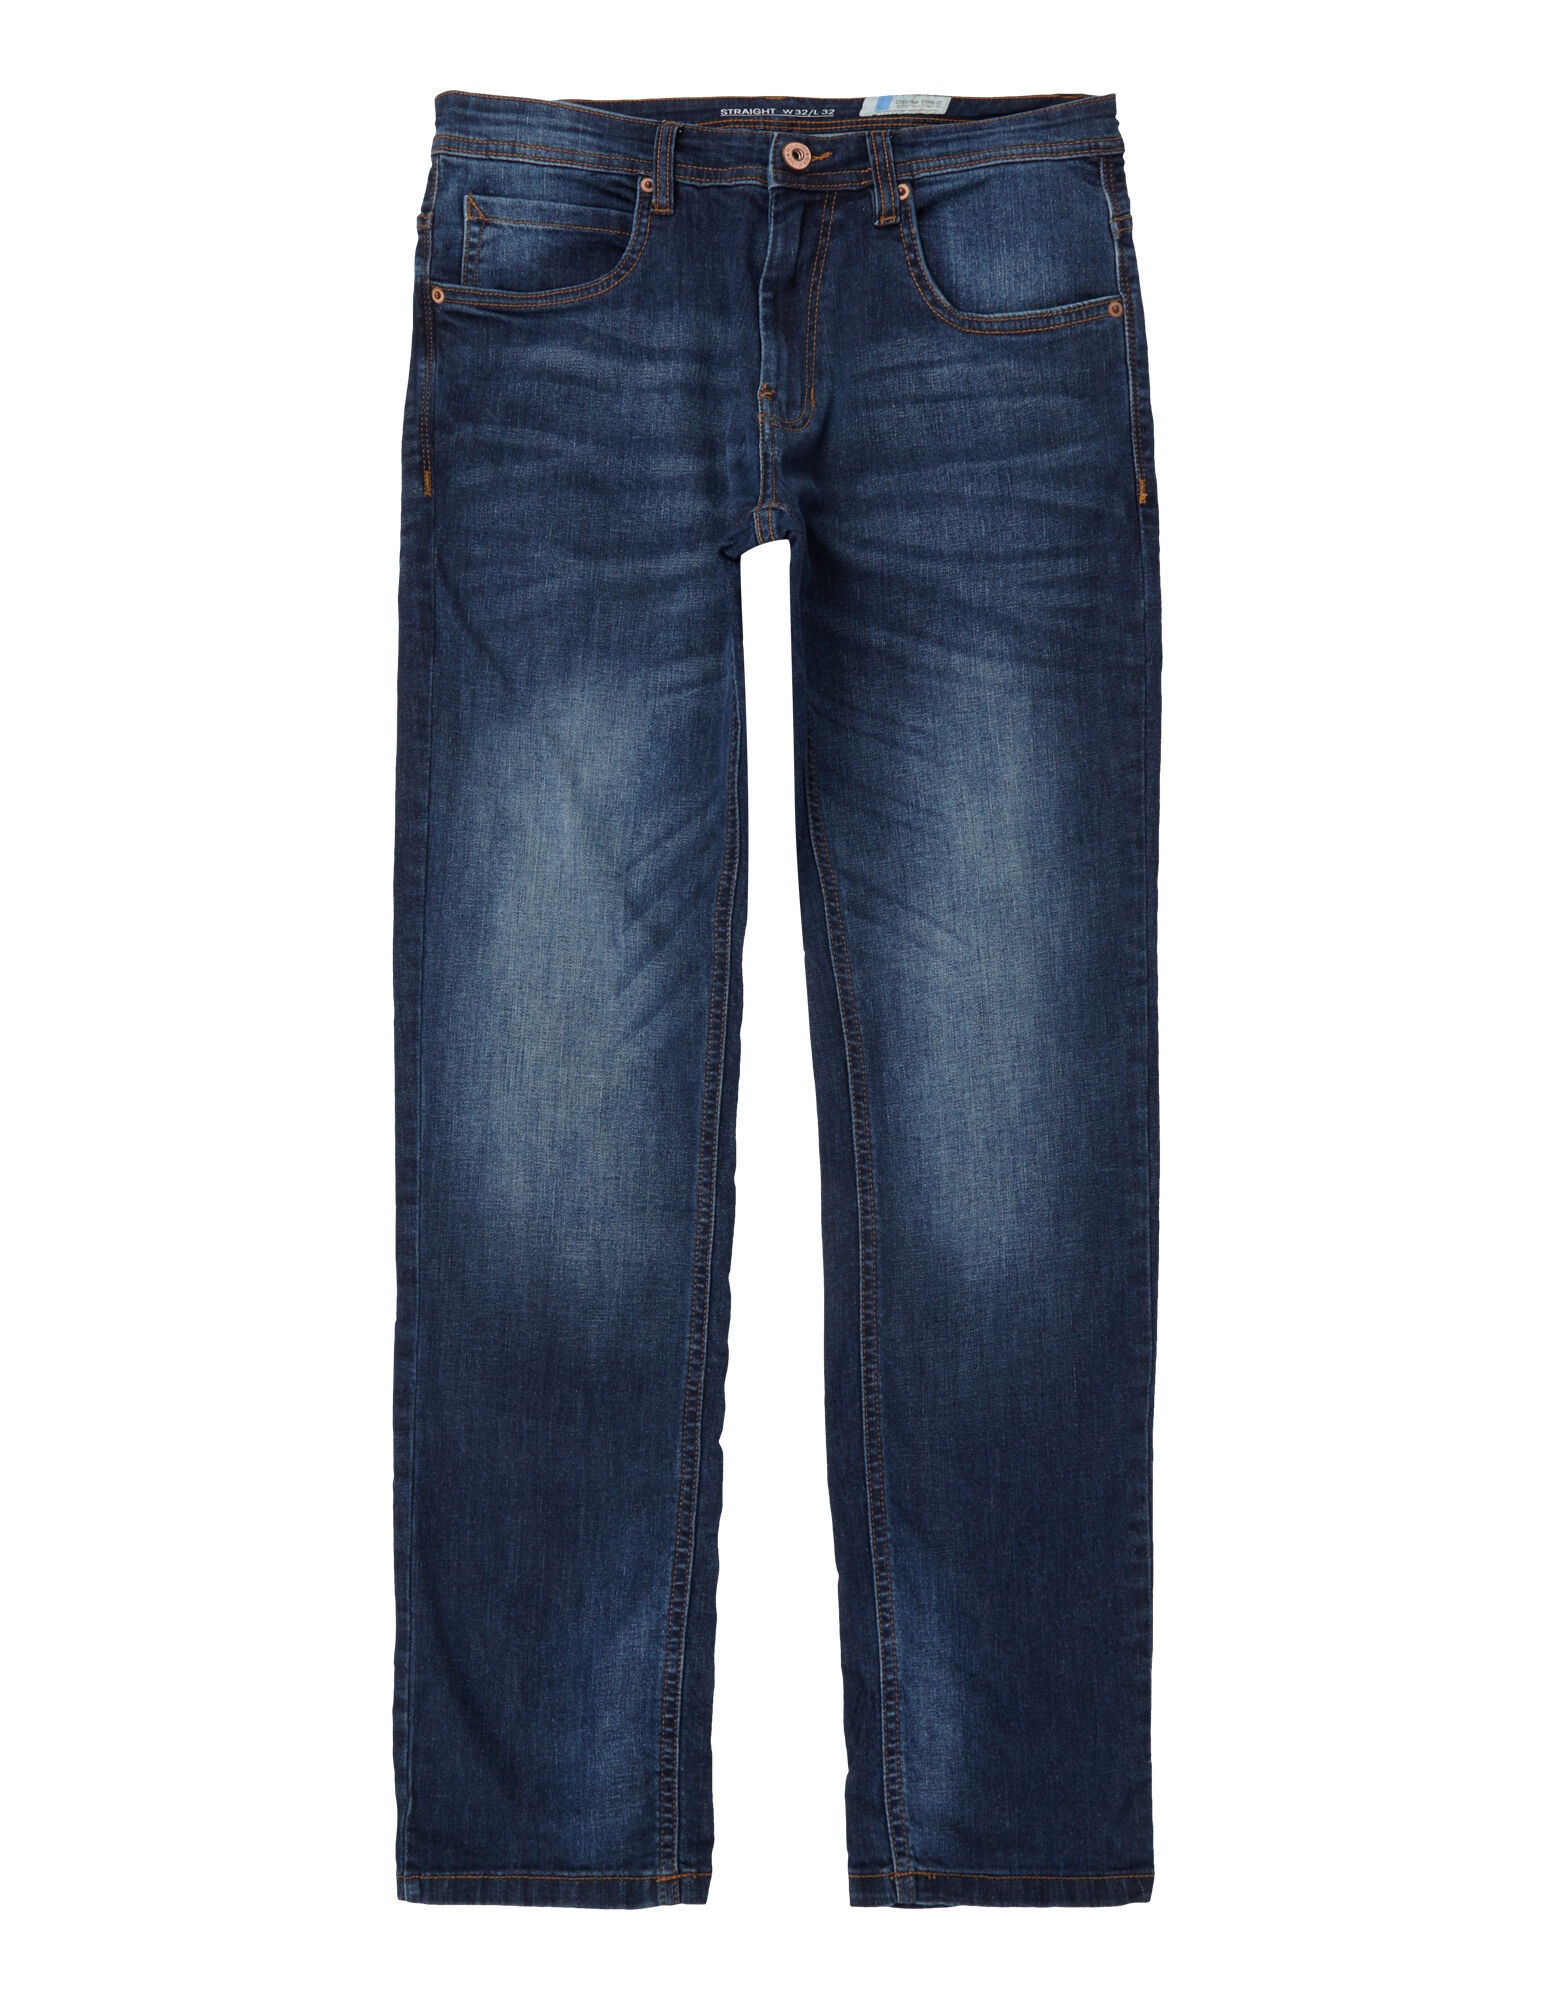 denim 1982 jeans